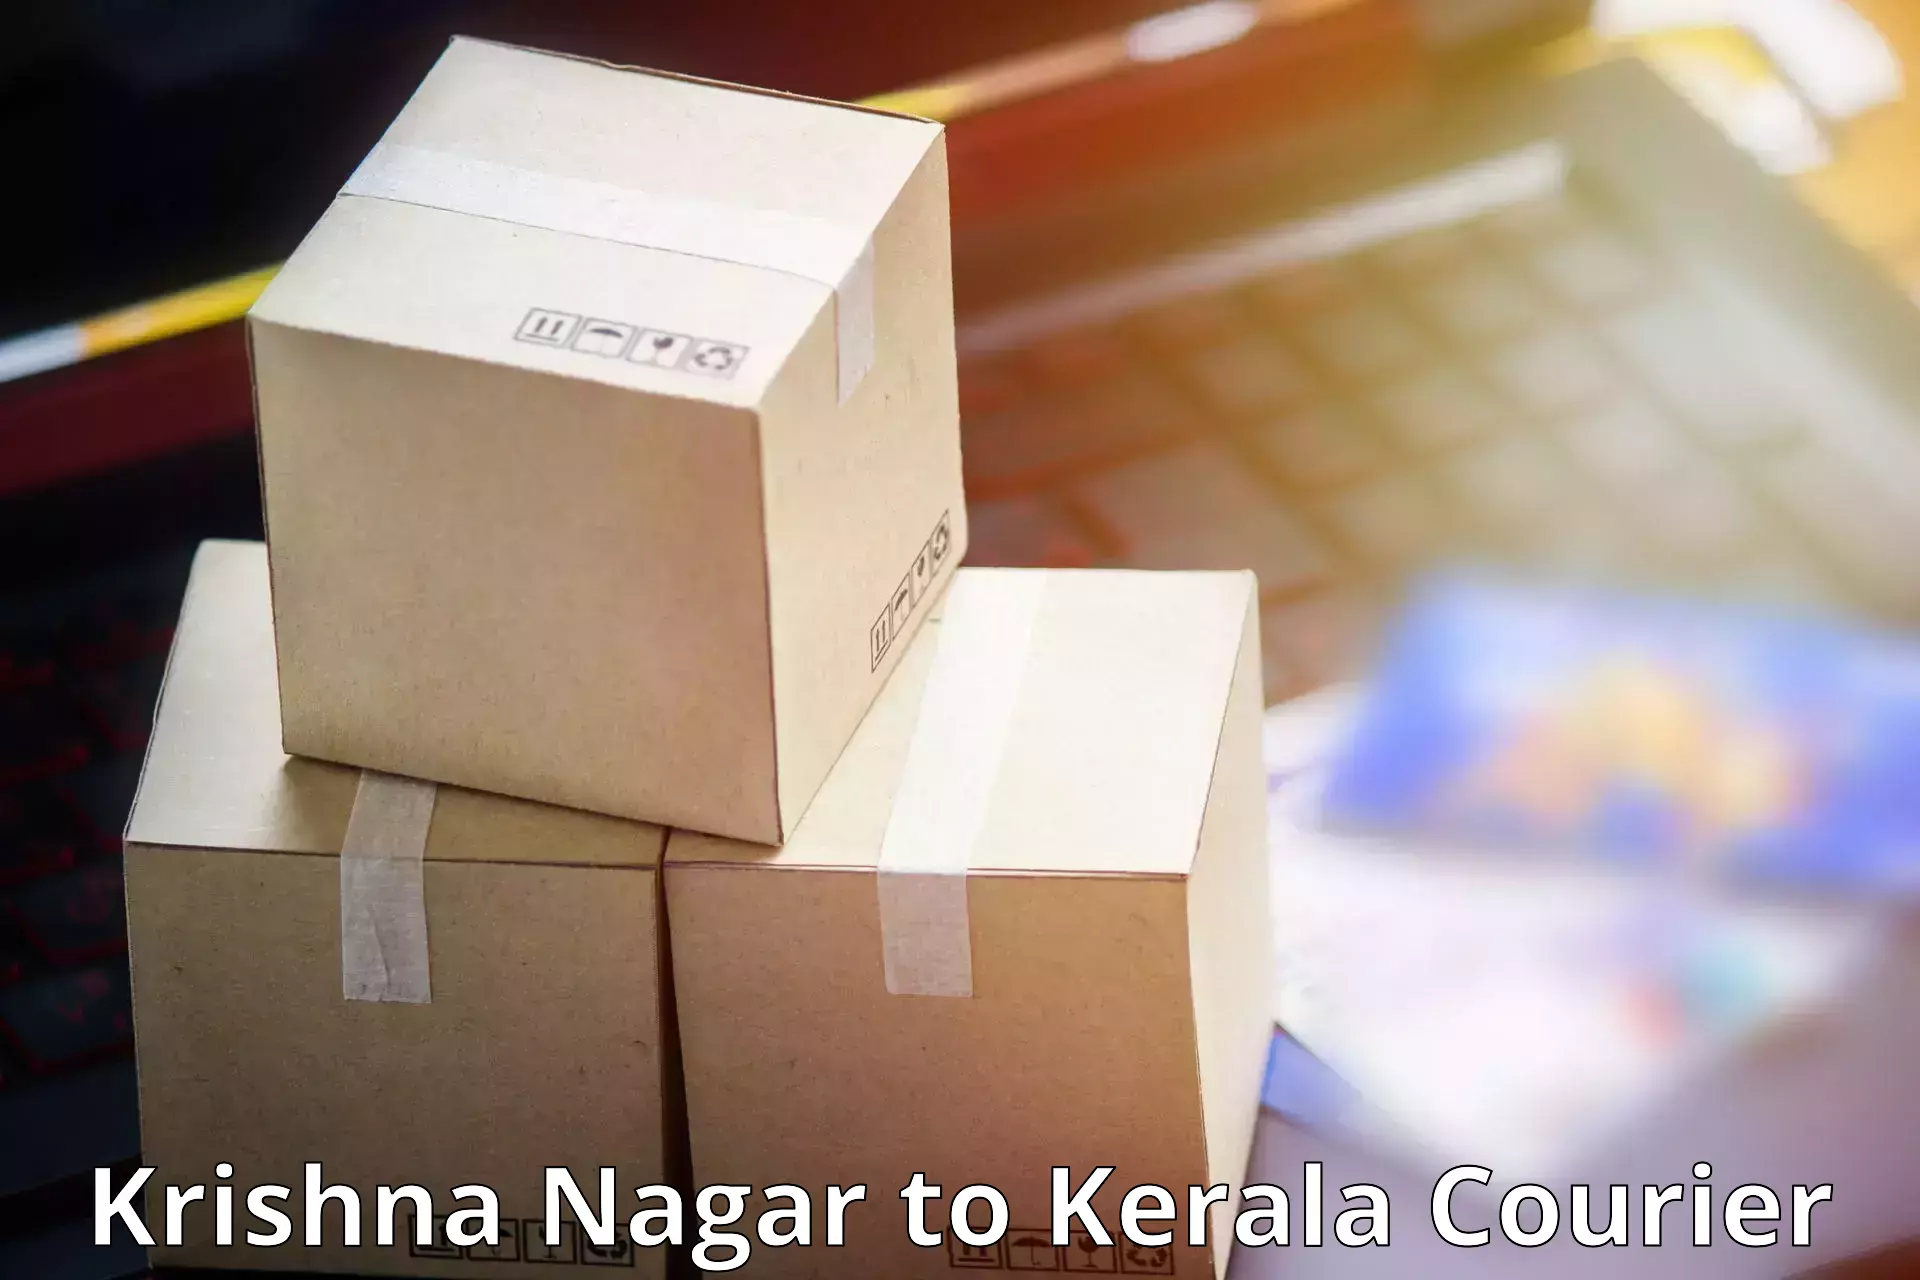 24/7 courier service Krishna Nagar to Cochin Port Kochi